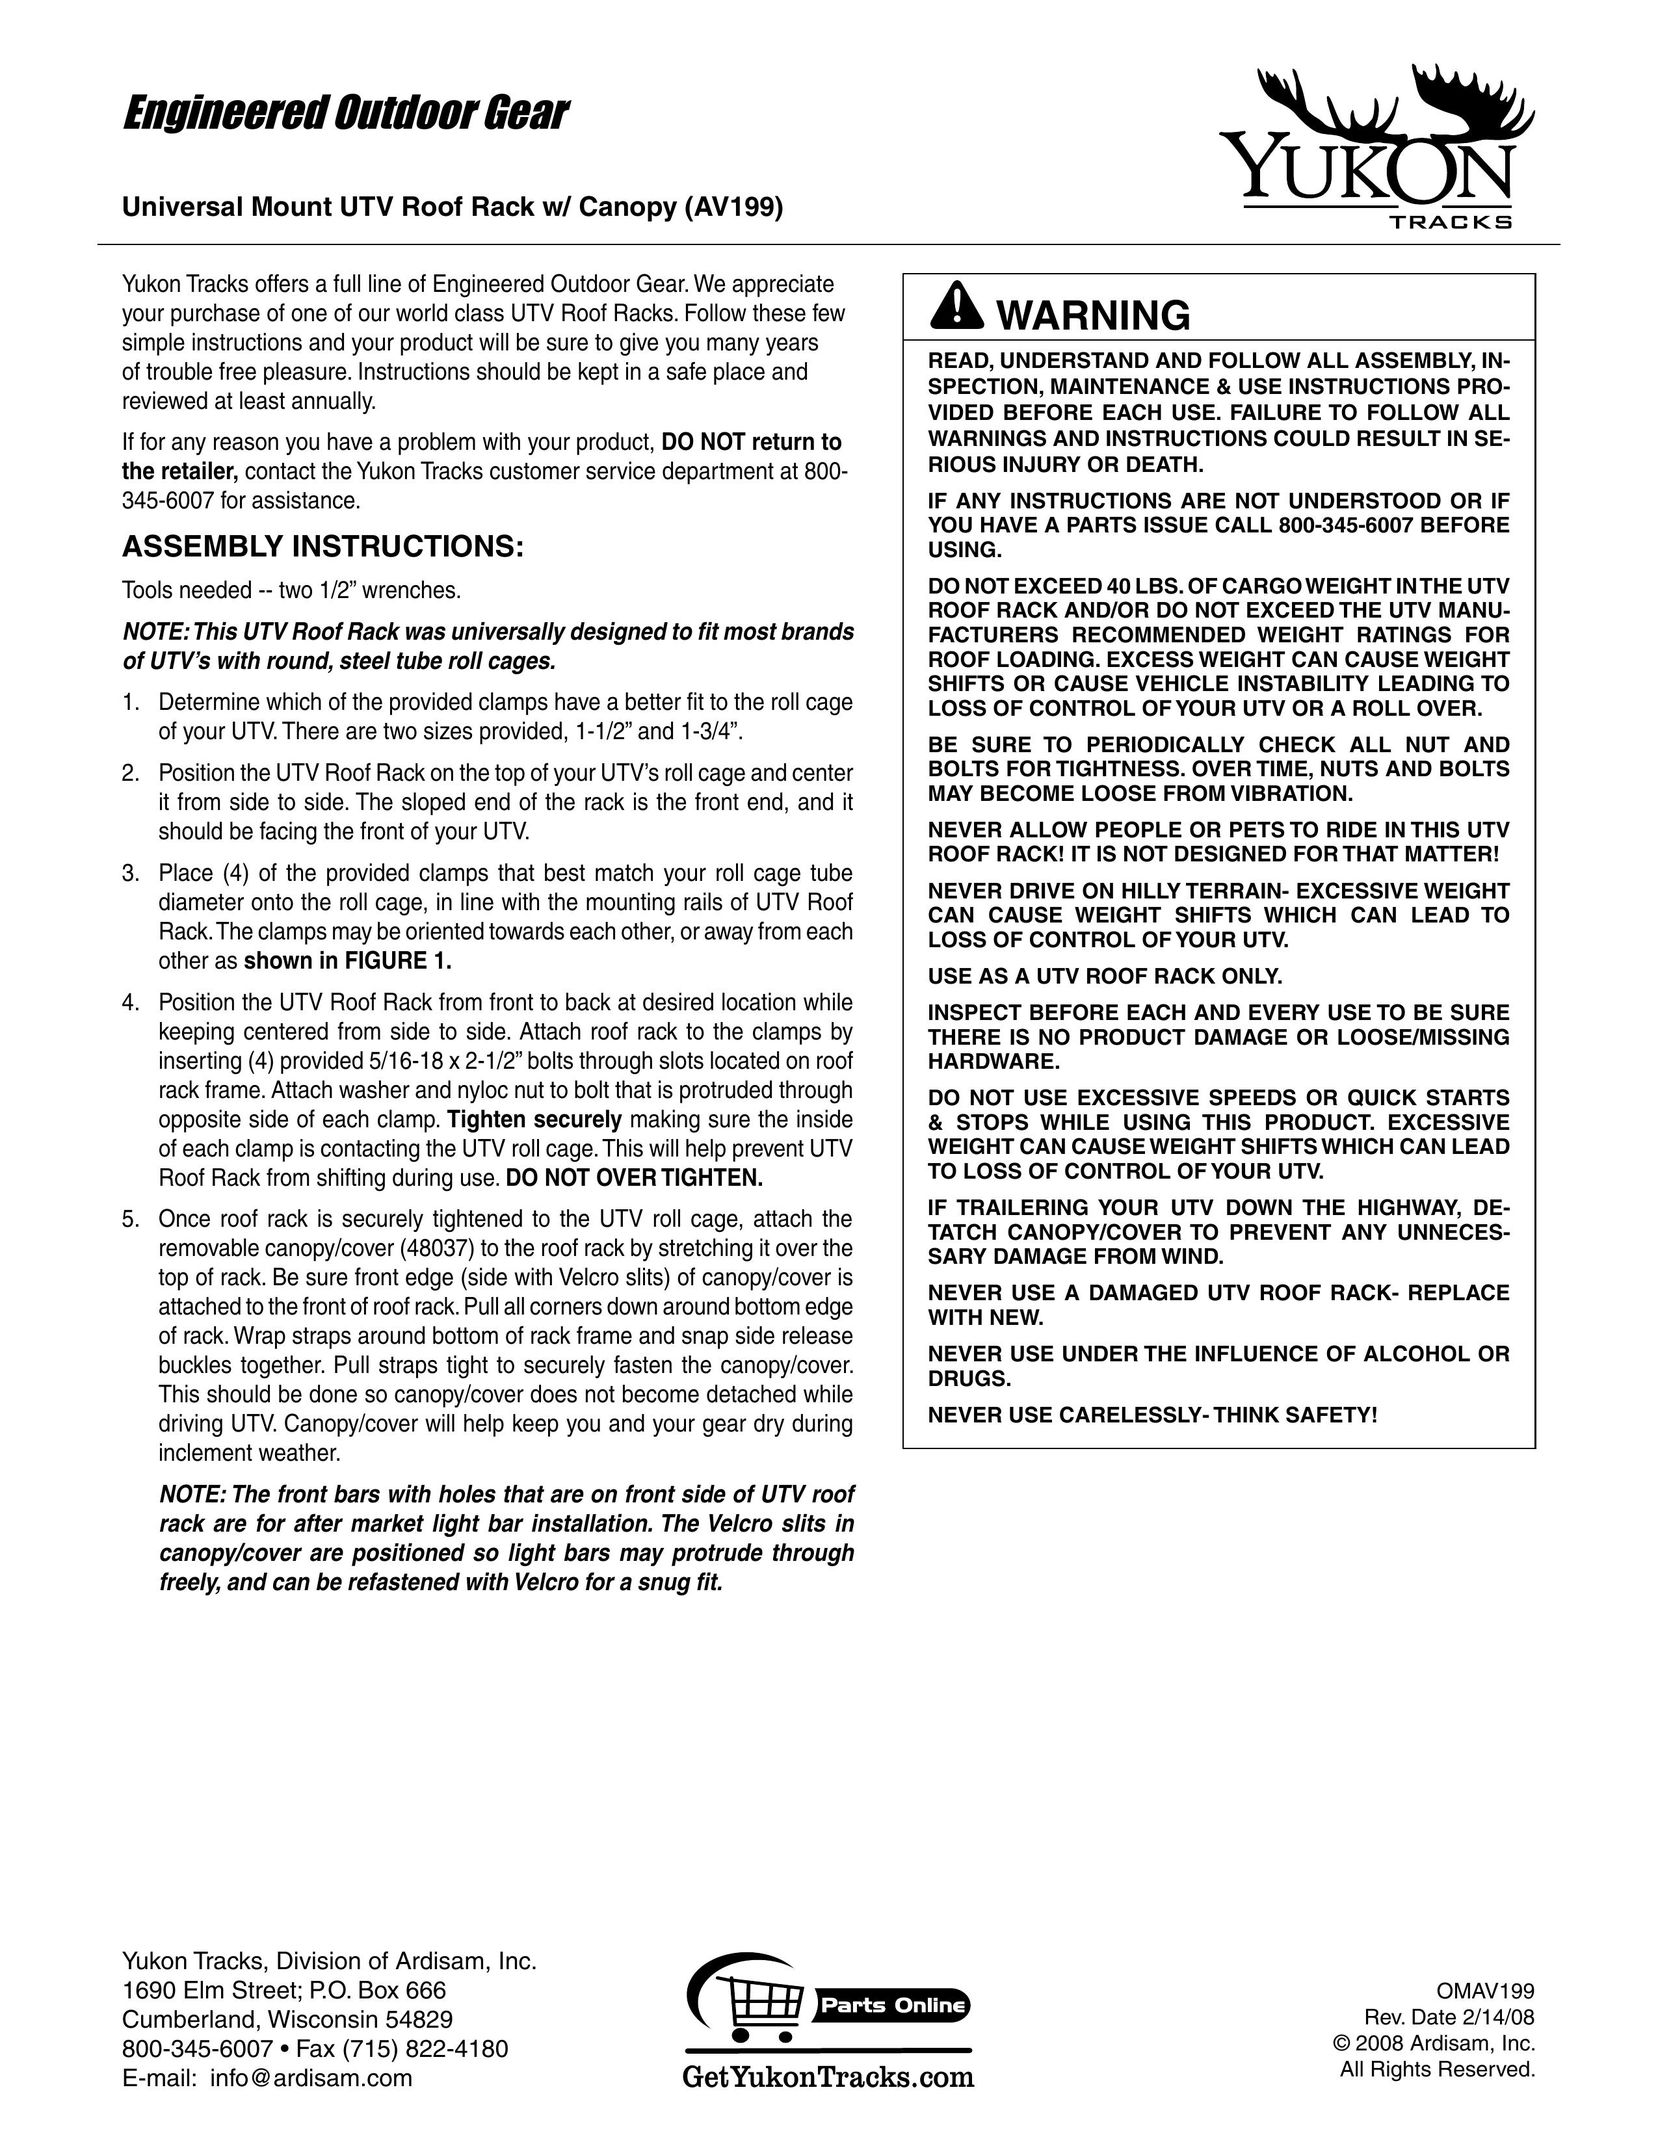 Yukon Tracks AV199 Indoor Furnishings User Manual